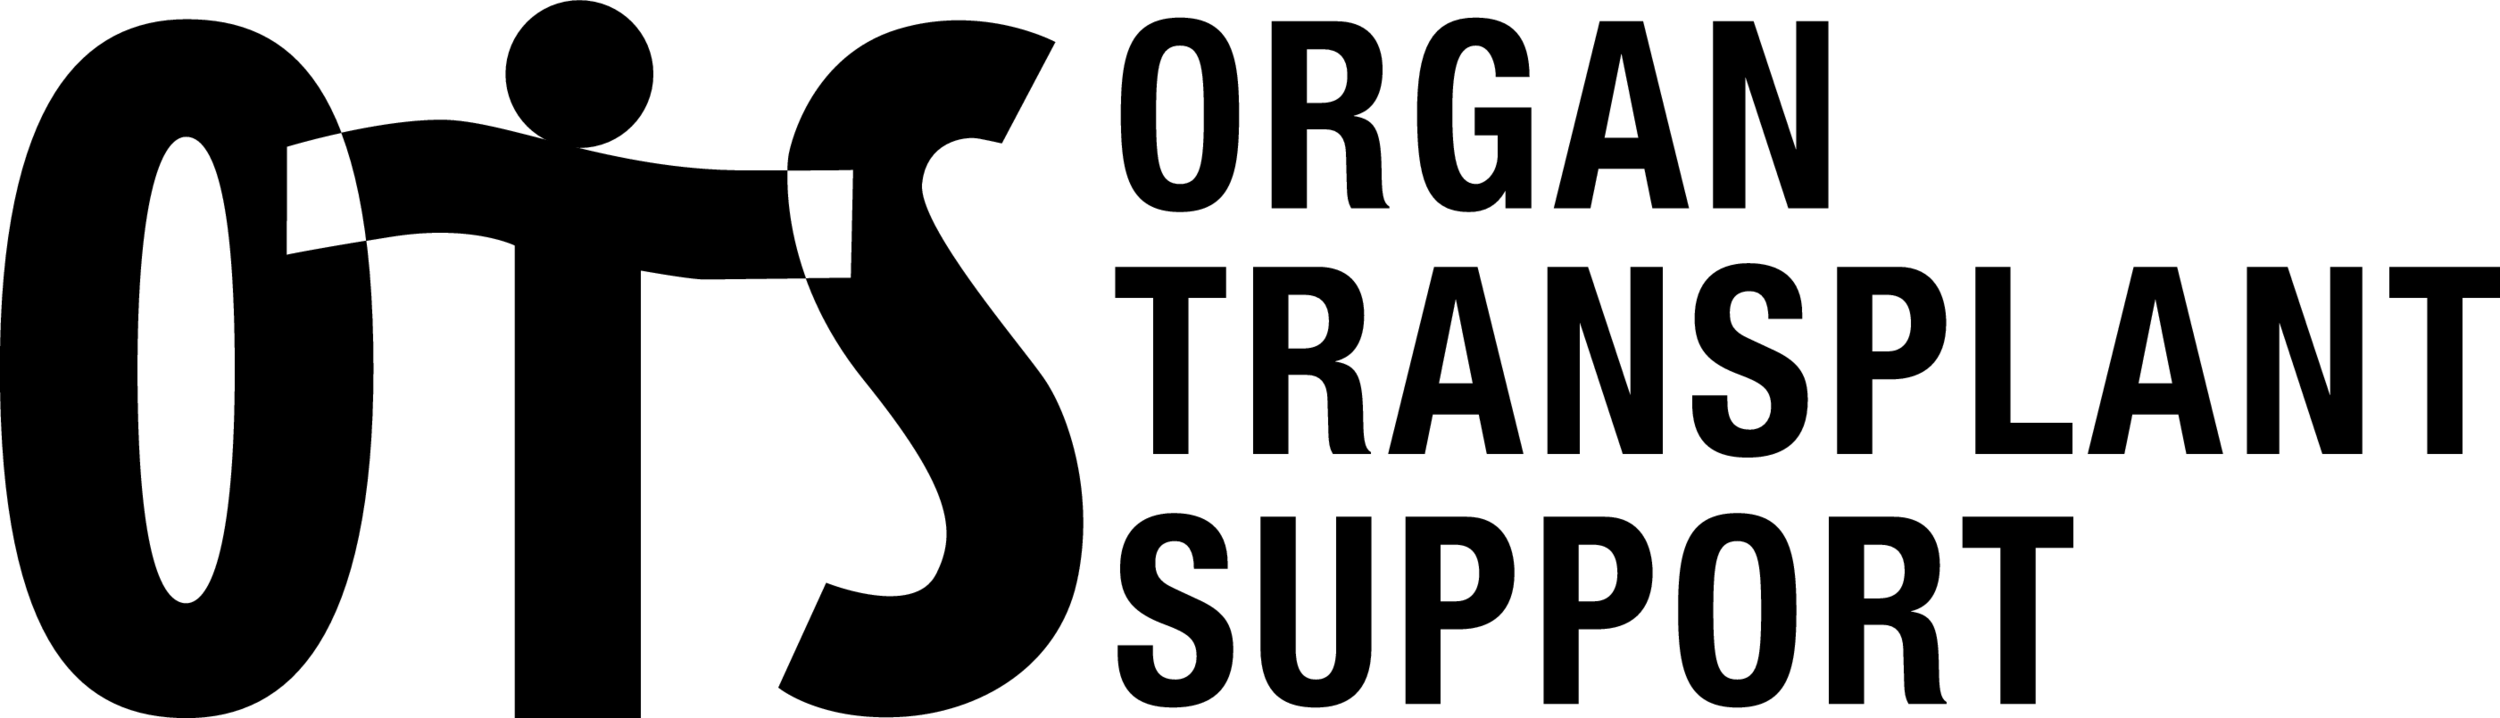 Organ Transplant Support, Inc